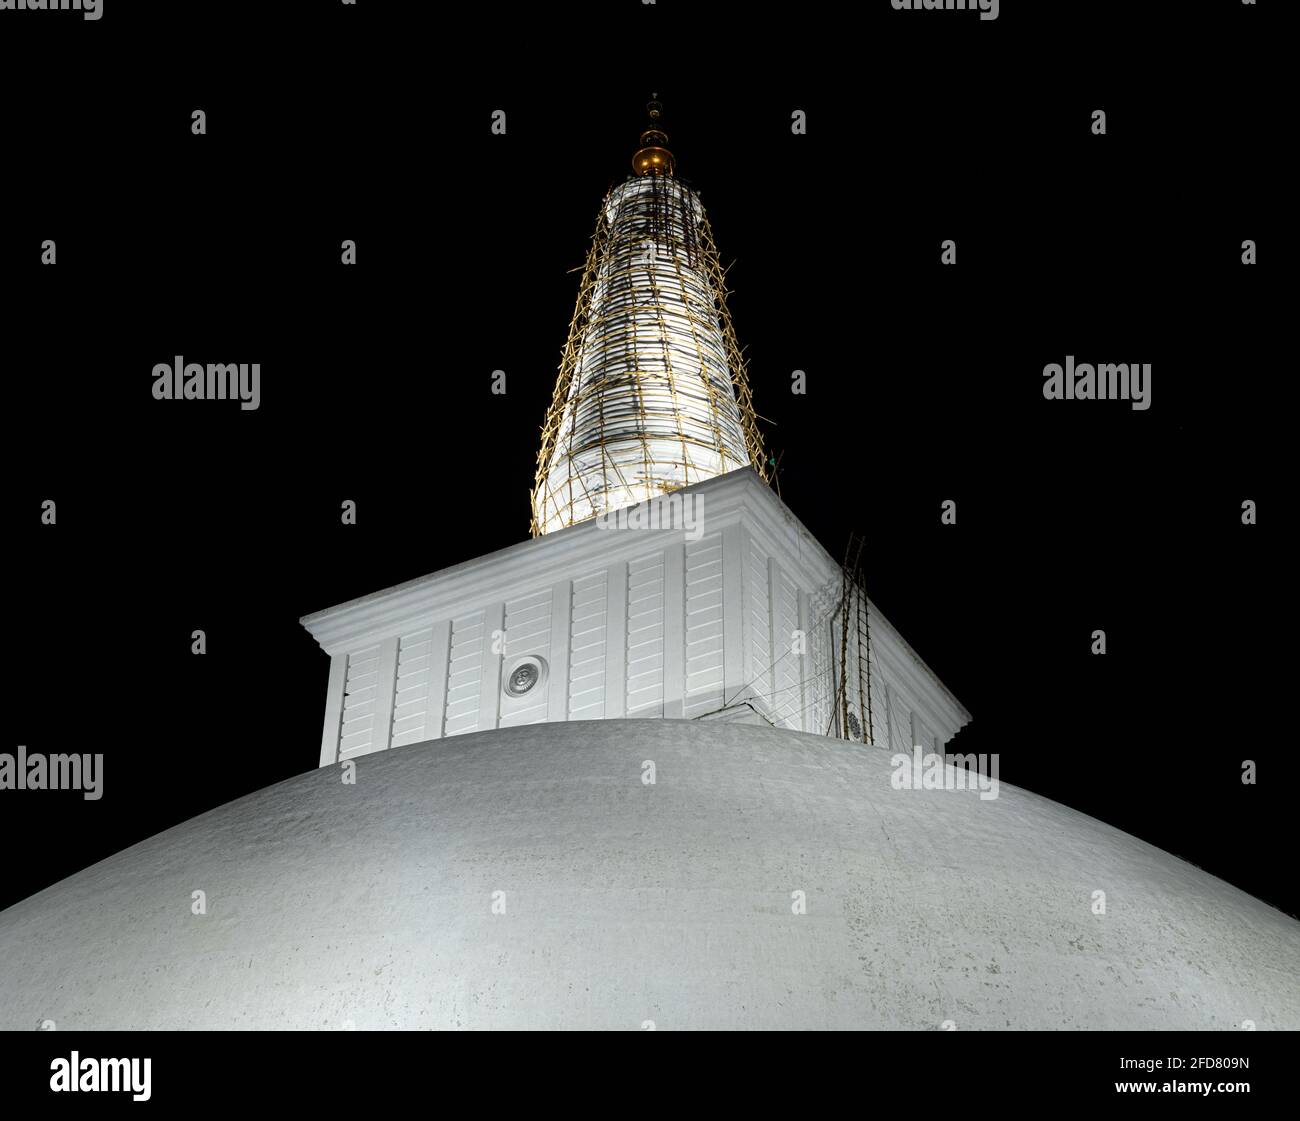 Ruwanwelisaya's stupa glowing in the night, it is a hemispherical structure and containing sacred Buddha's relics built by King Dutugamunu. Stock Photo